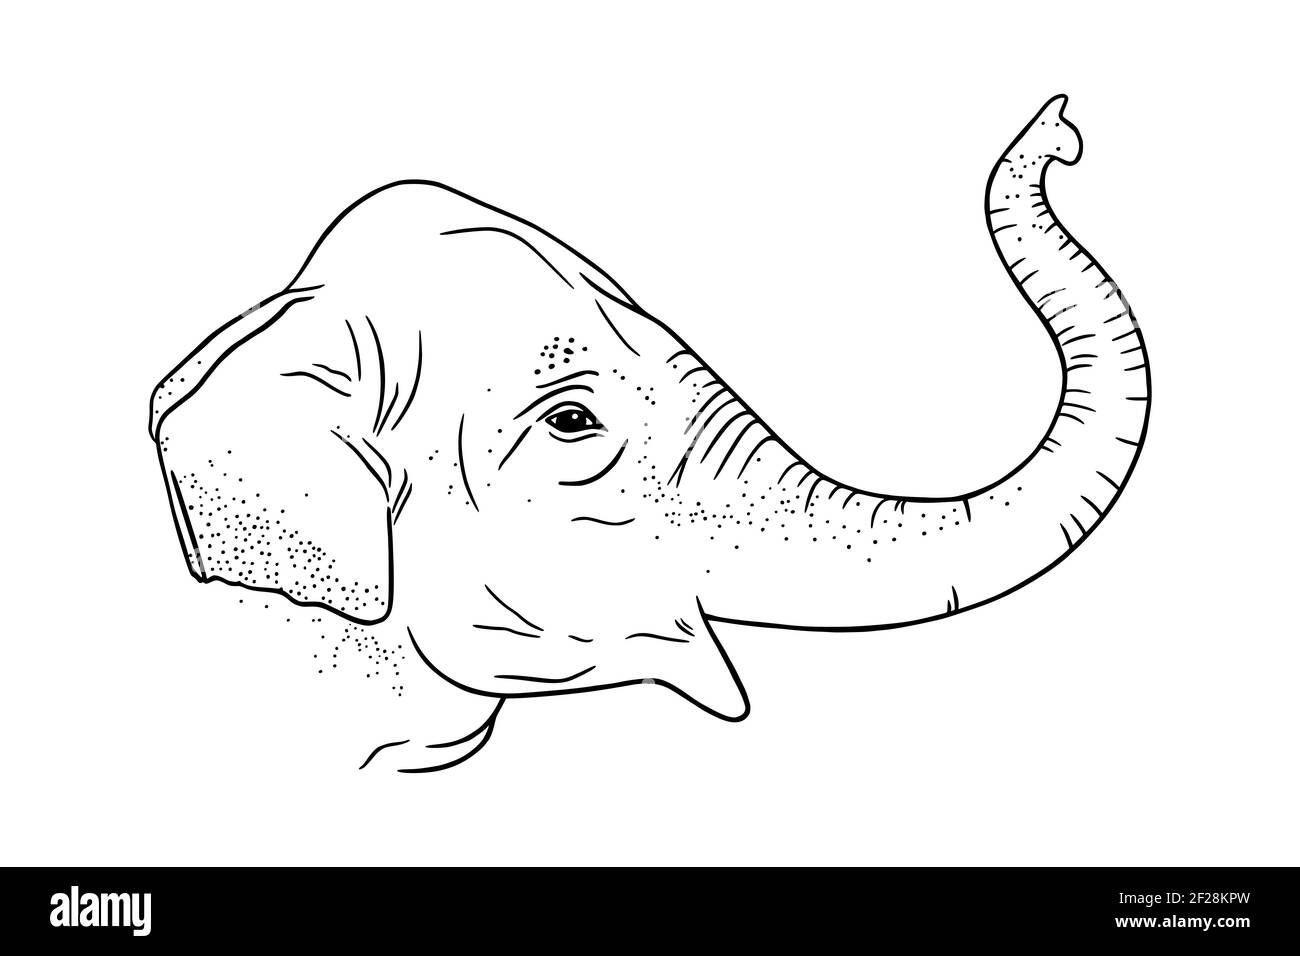 Drawing a realistic ELEPHANT | Yehoshua Shellim - YouTube